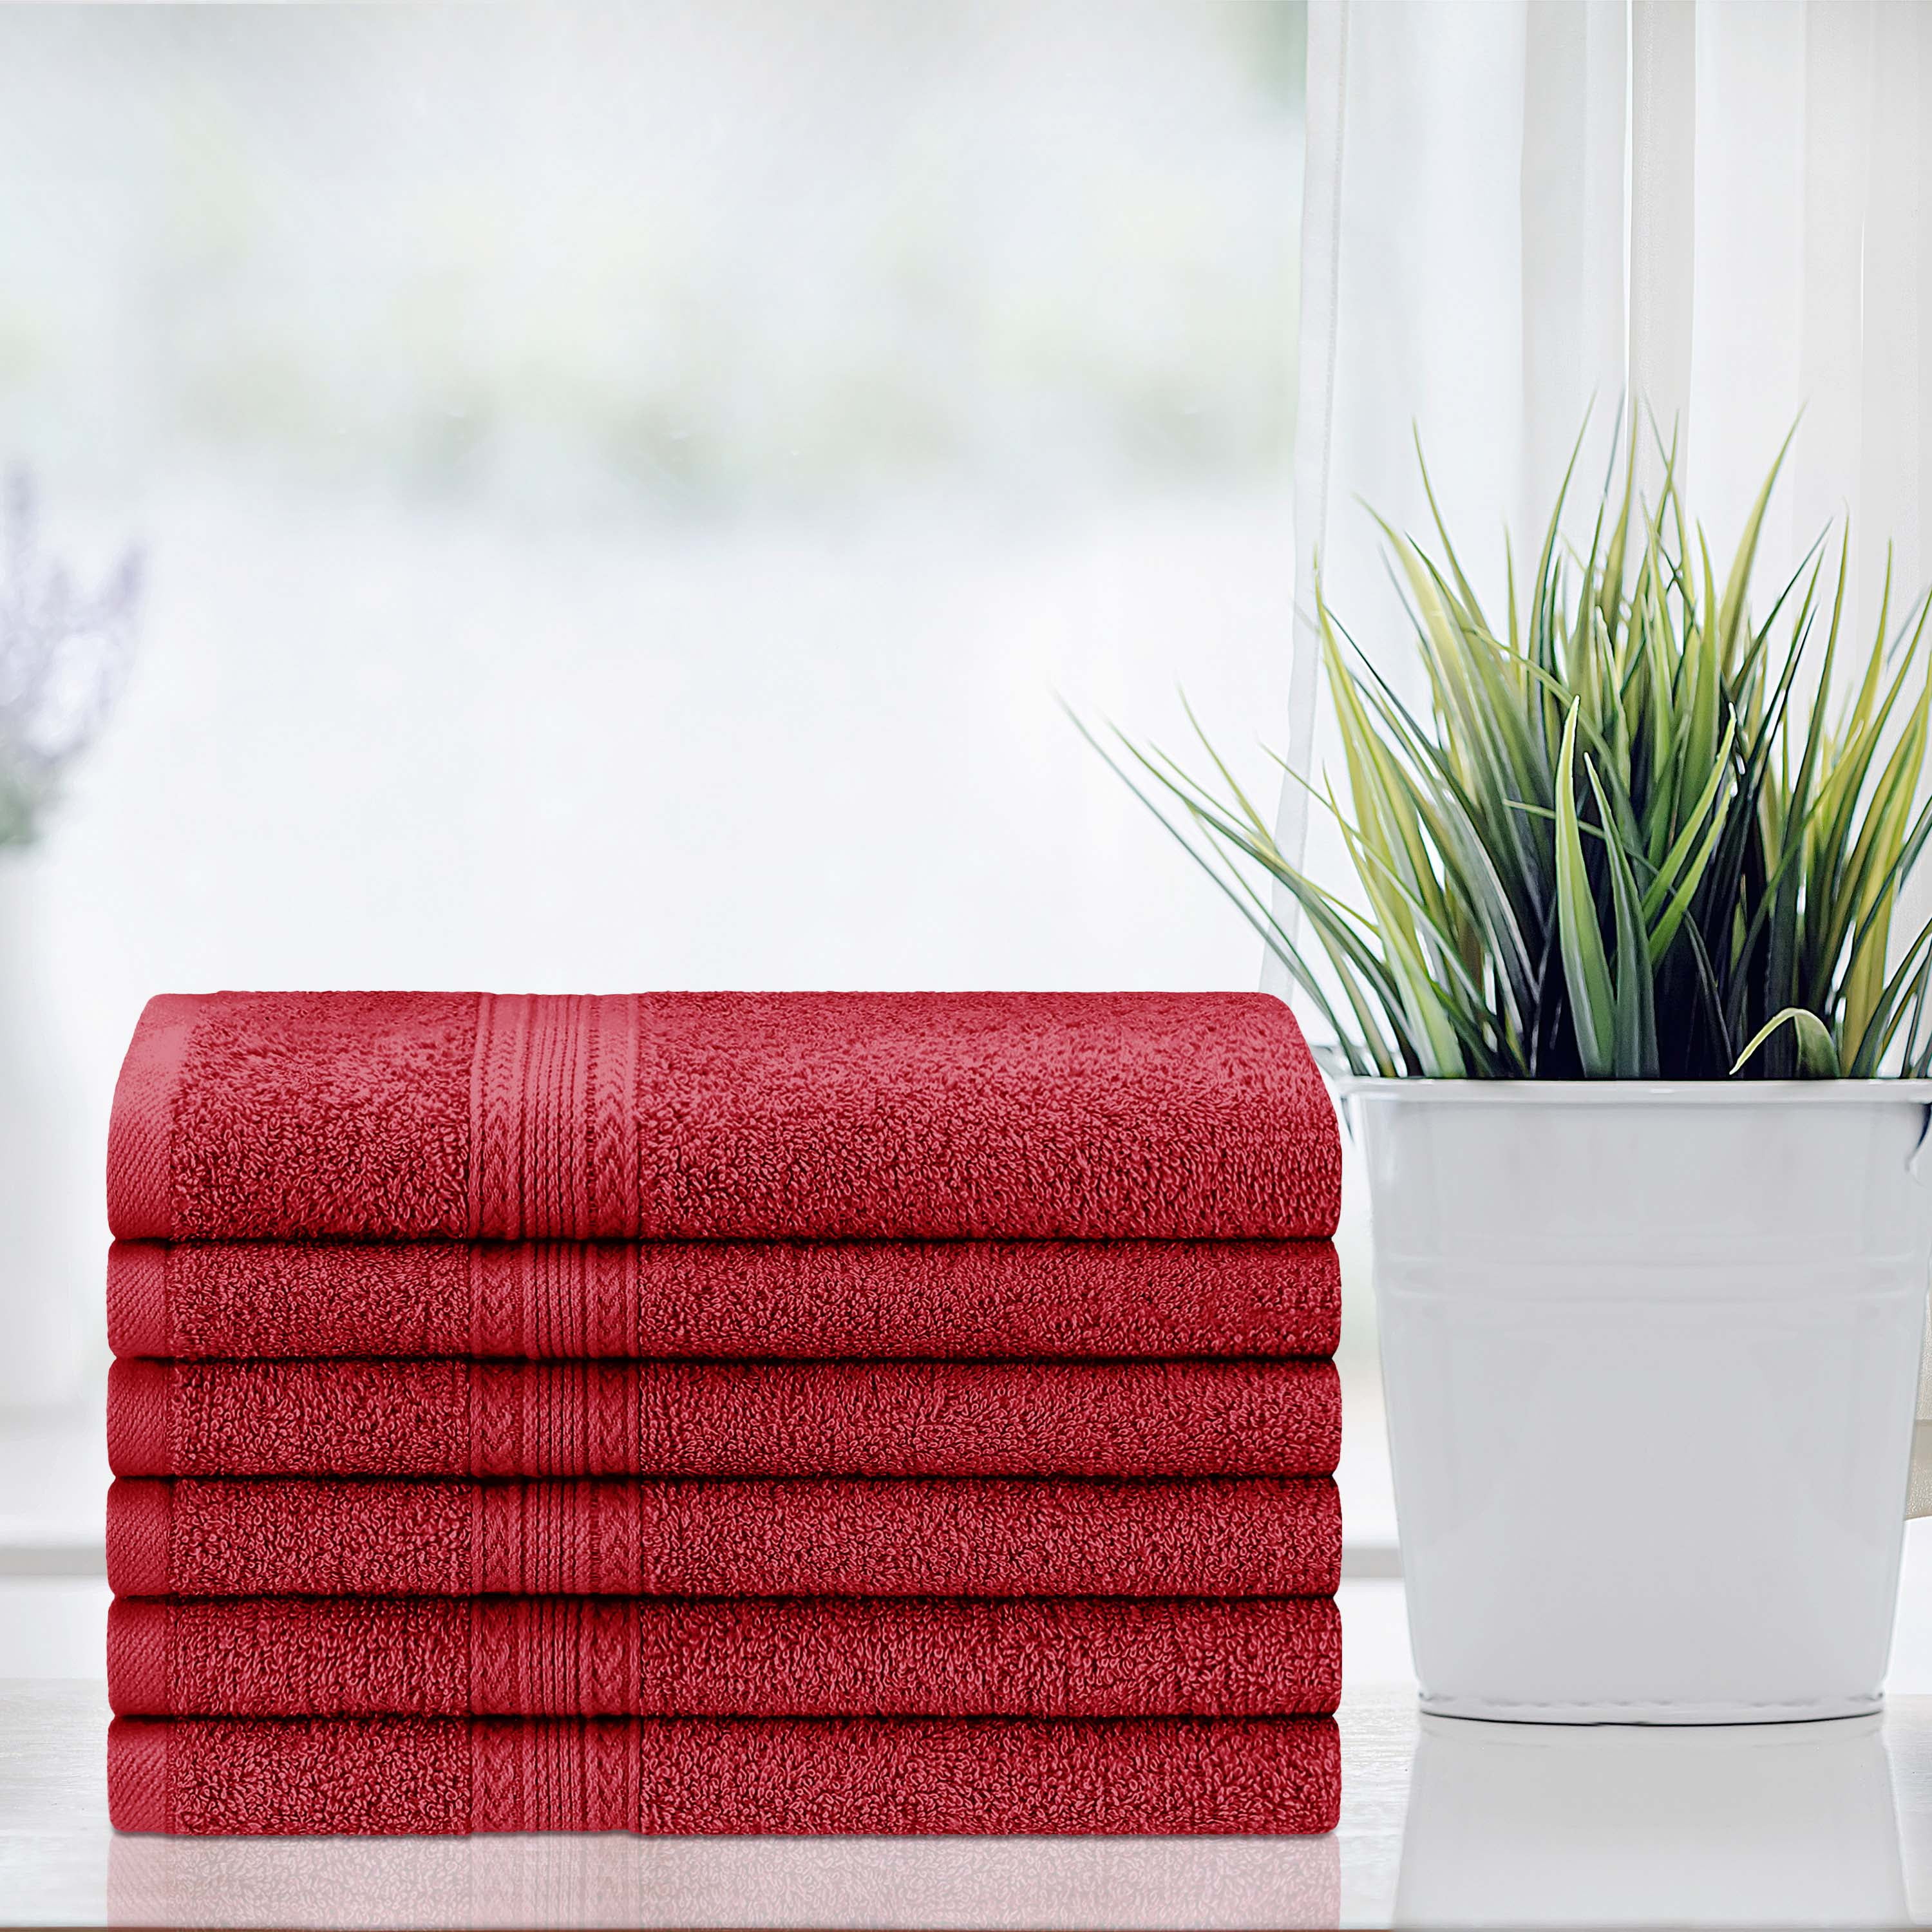 Basics 6-Set of Pinzon Organic Cotton Hand Towels only $8.01